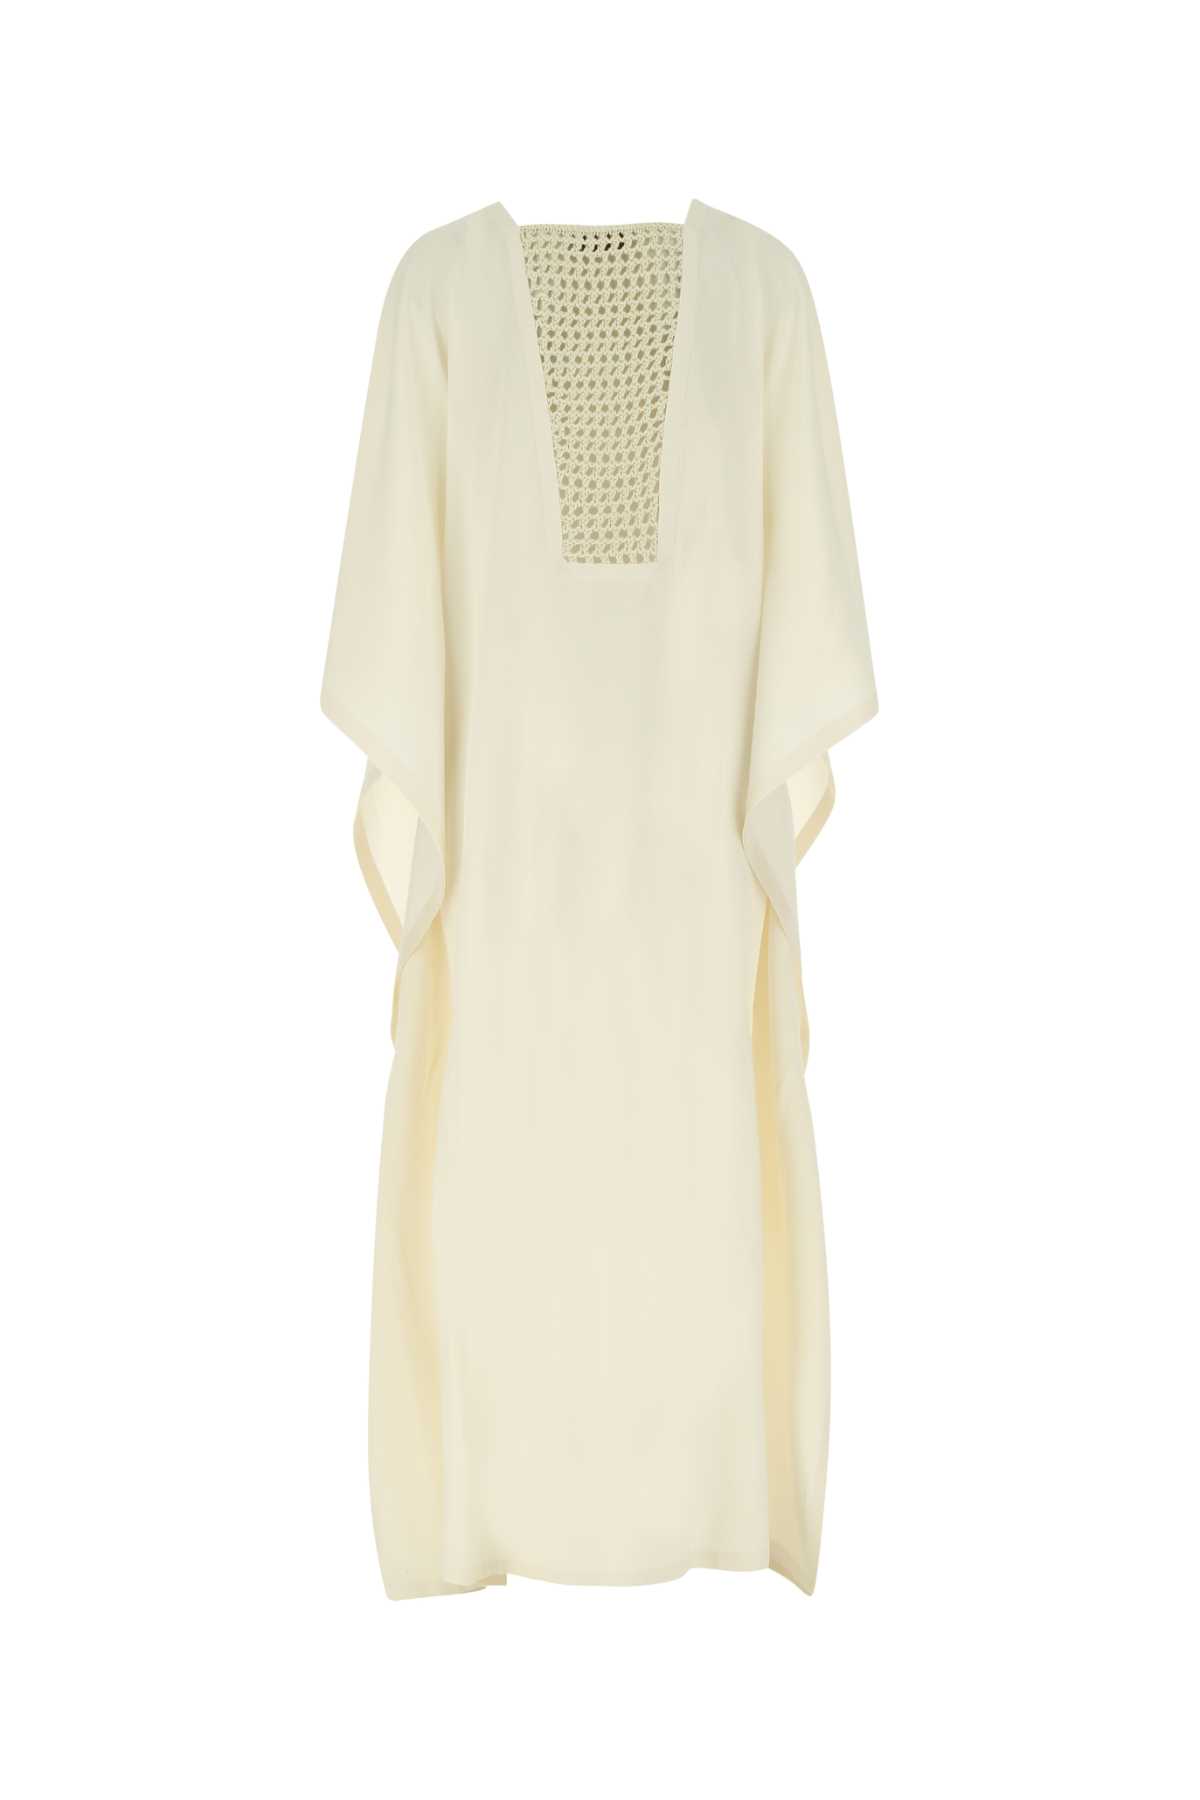 Agnona Ivory Wool Blend Tunic Dress In N00